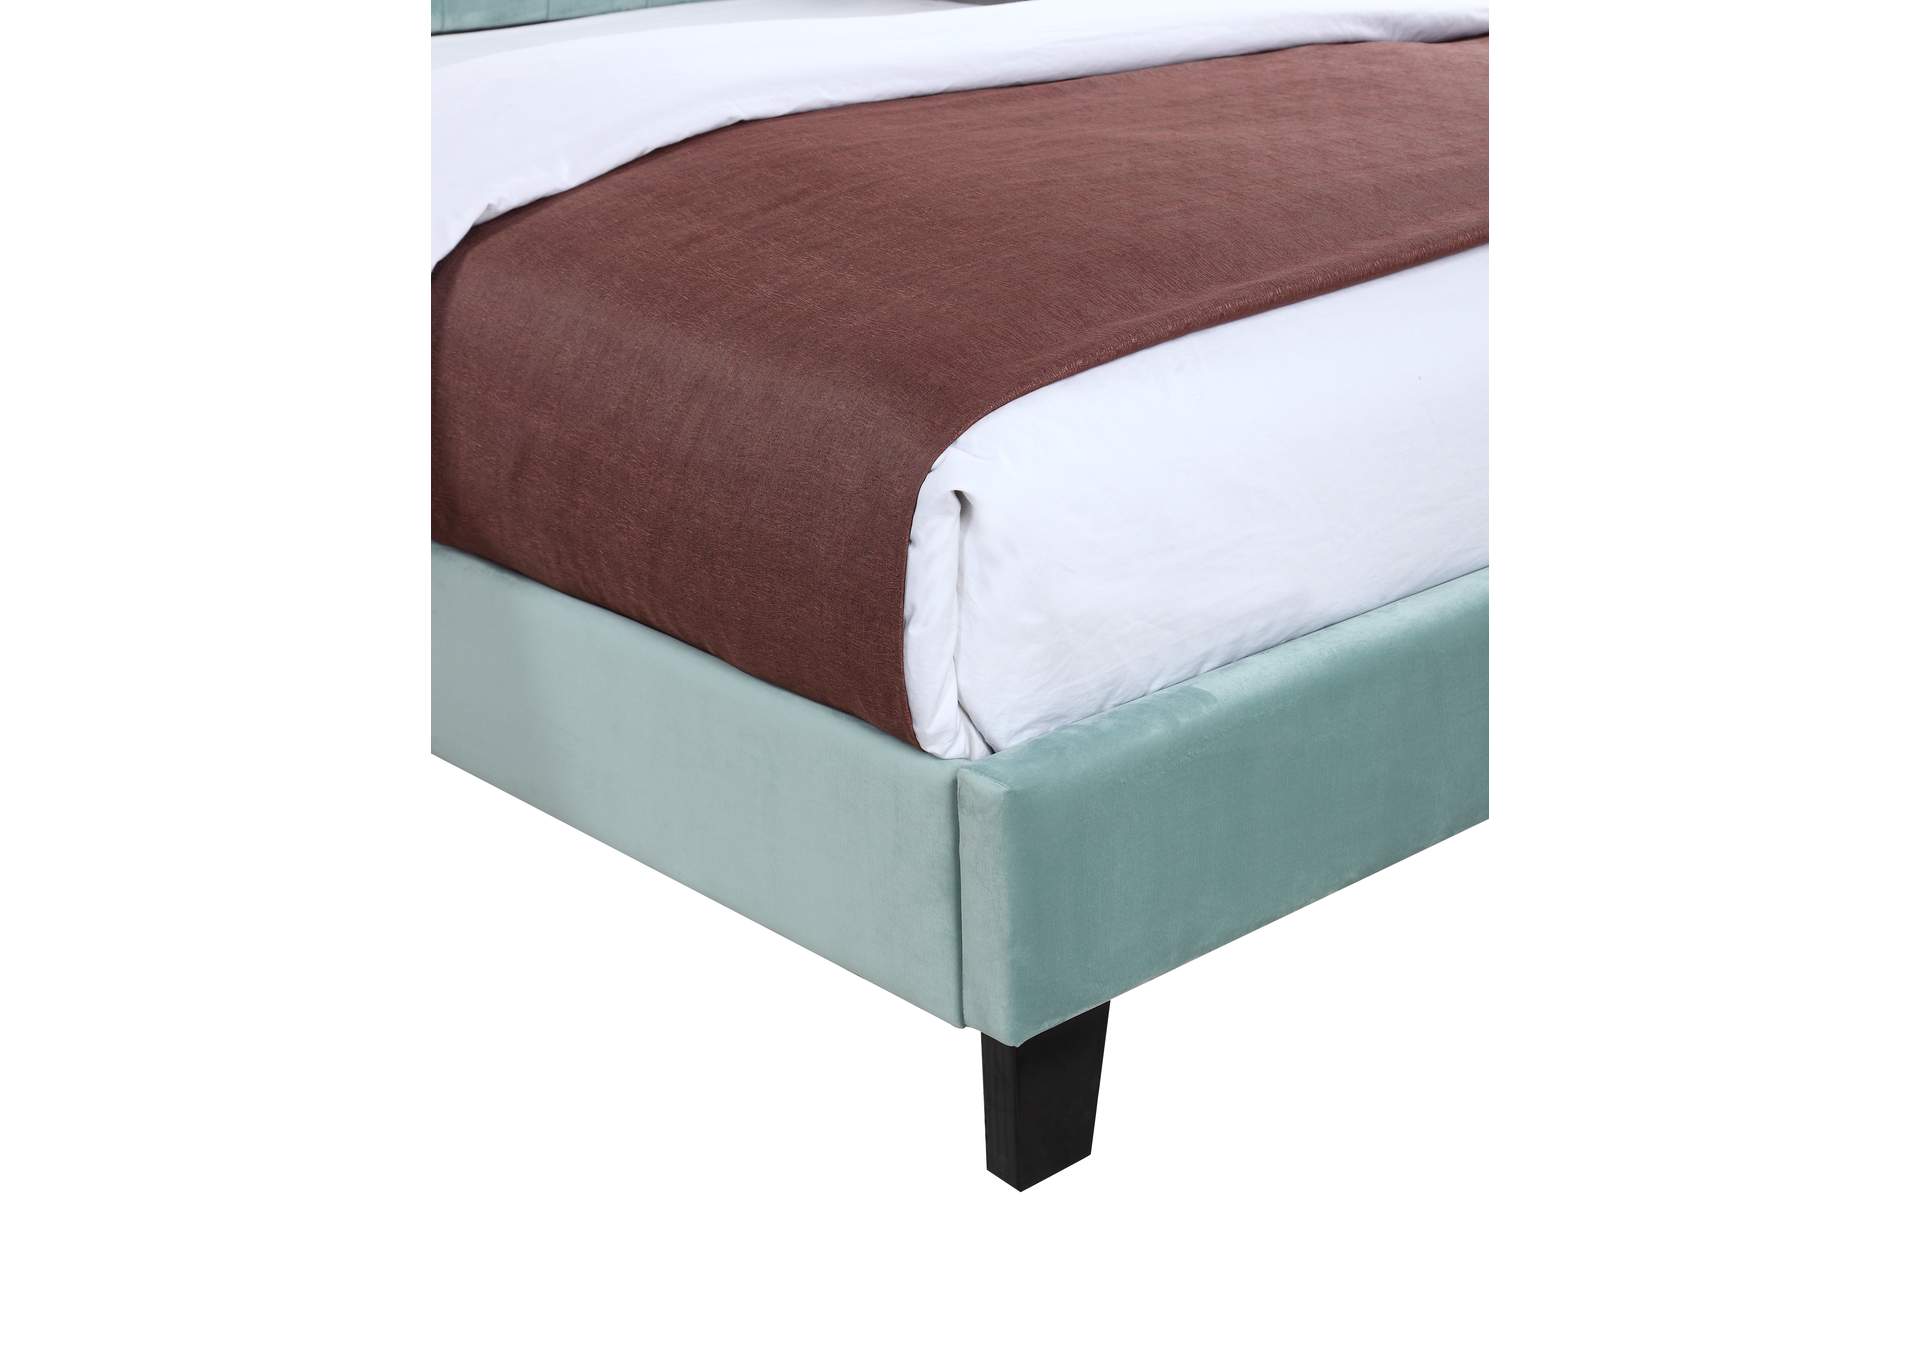 Amelia Full Upholstered Bed,Emerald Home Furnishings